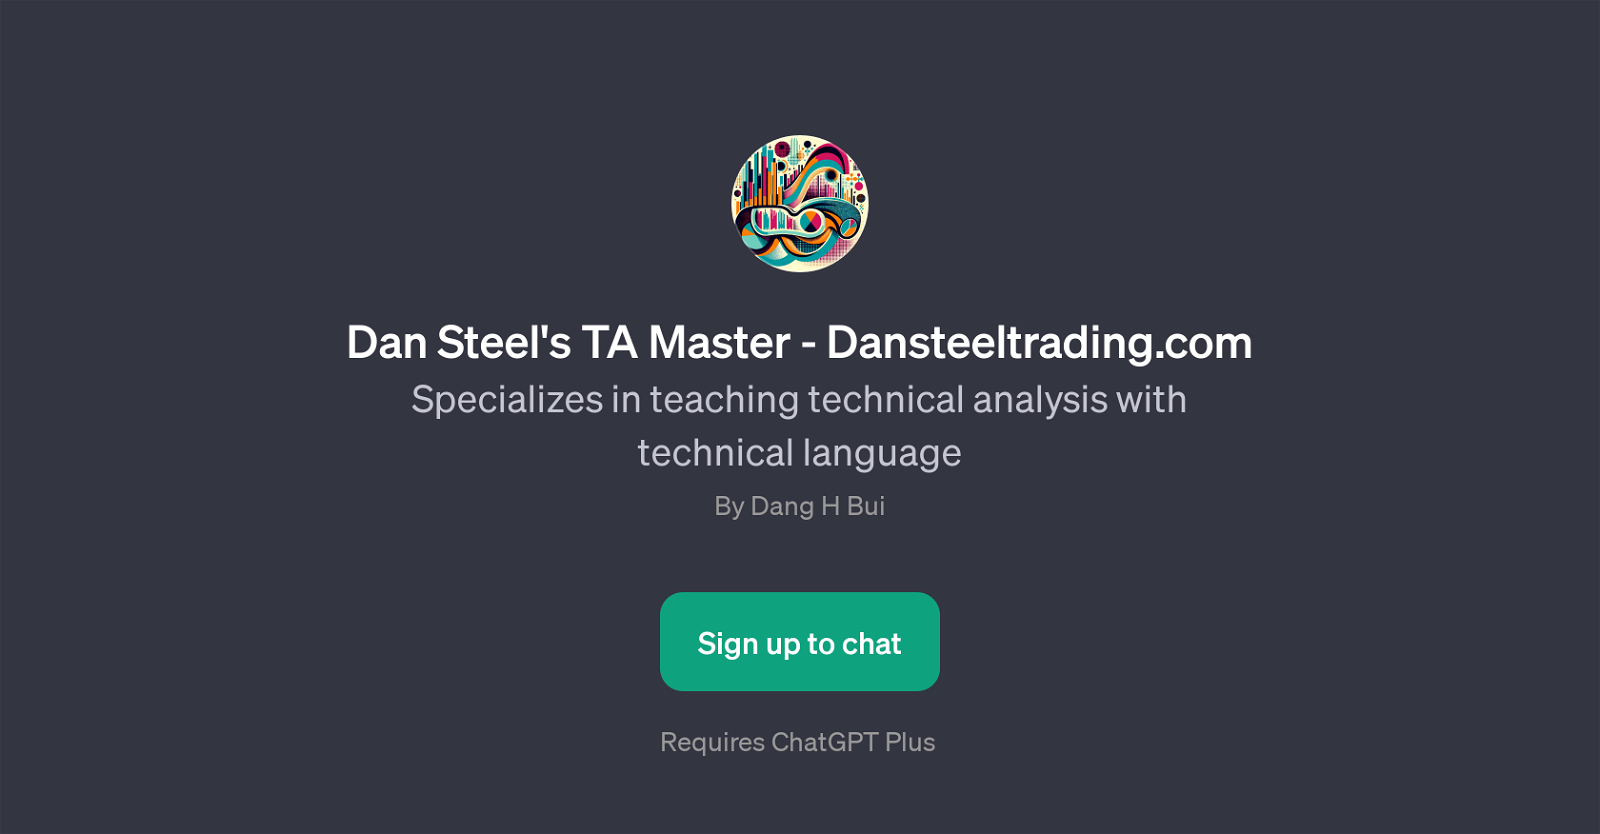 Dan Steel's TA Master website